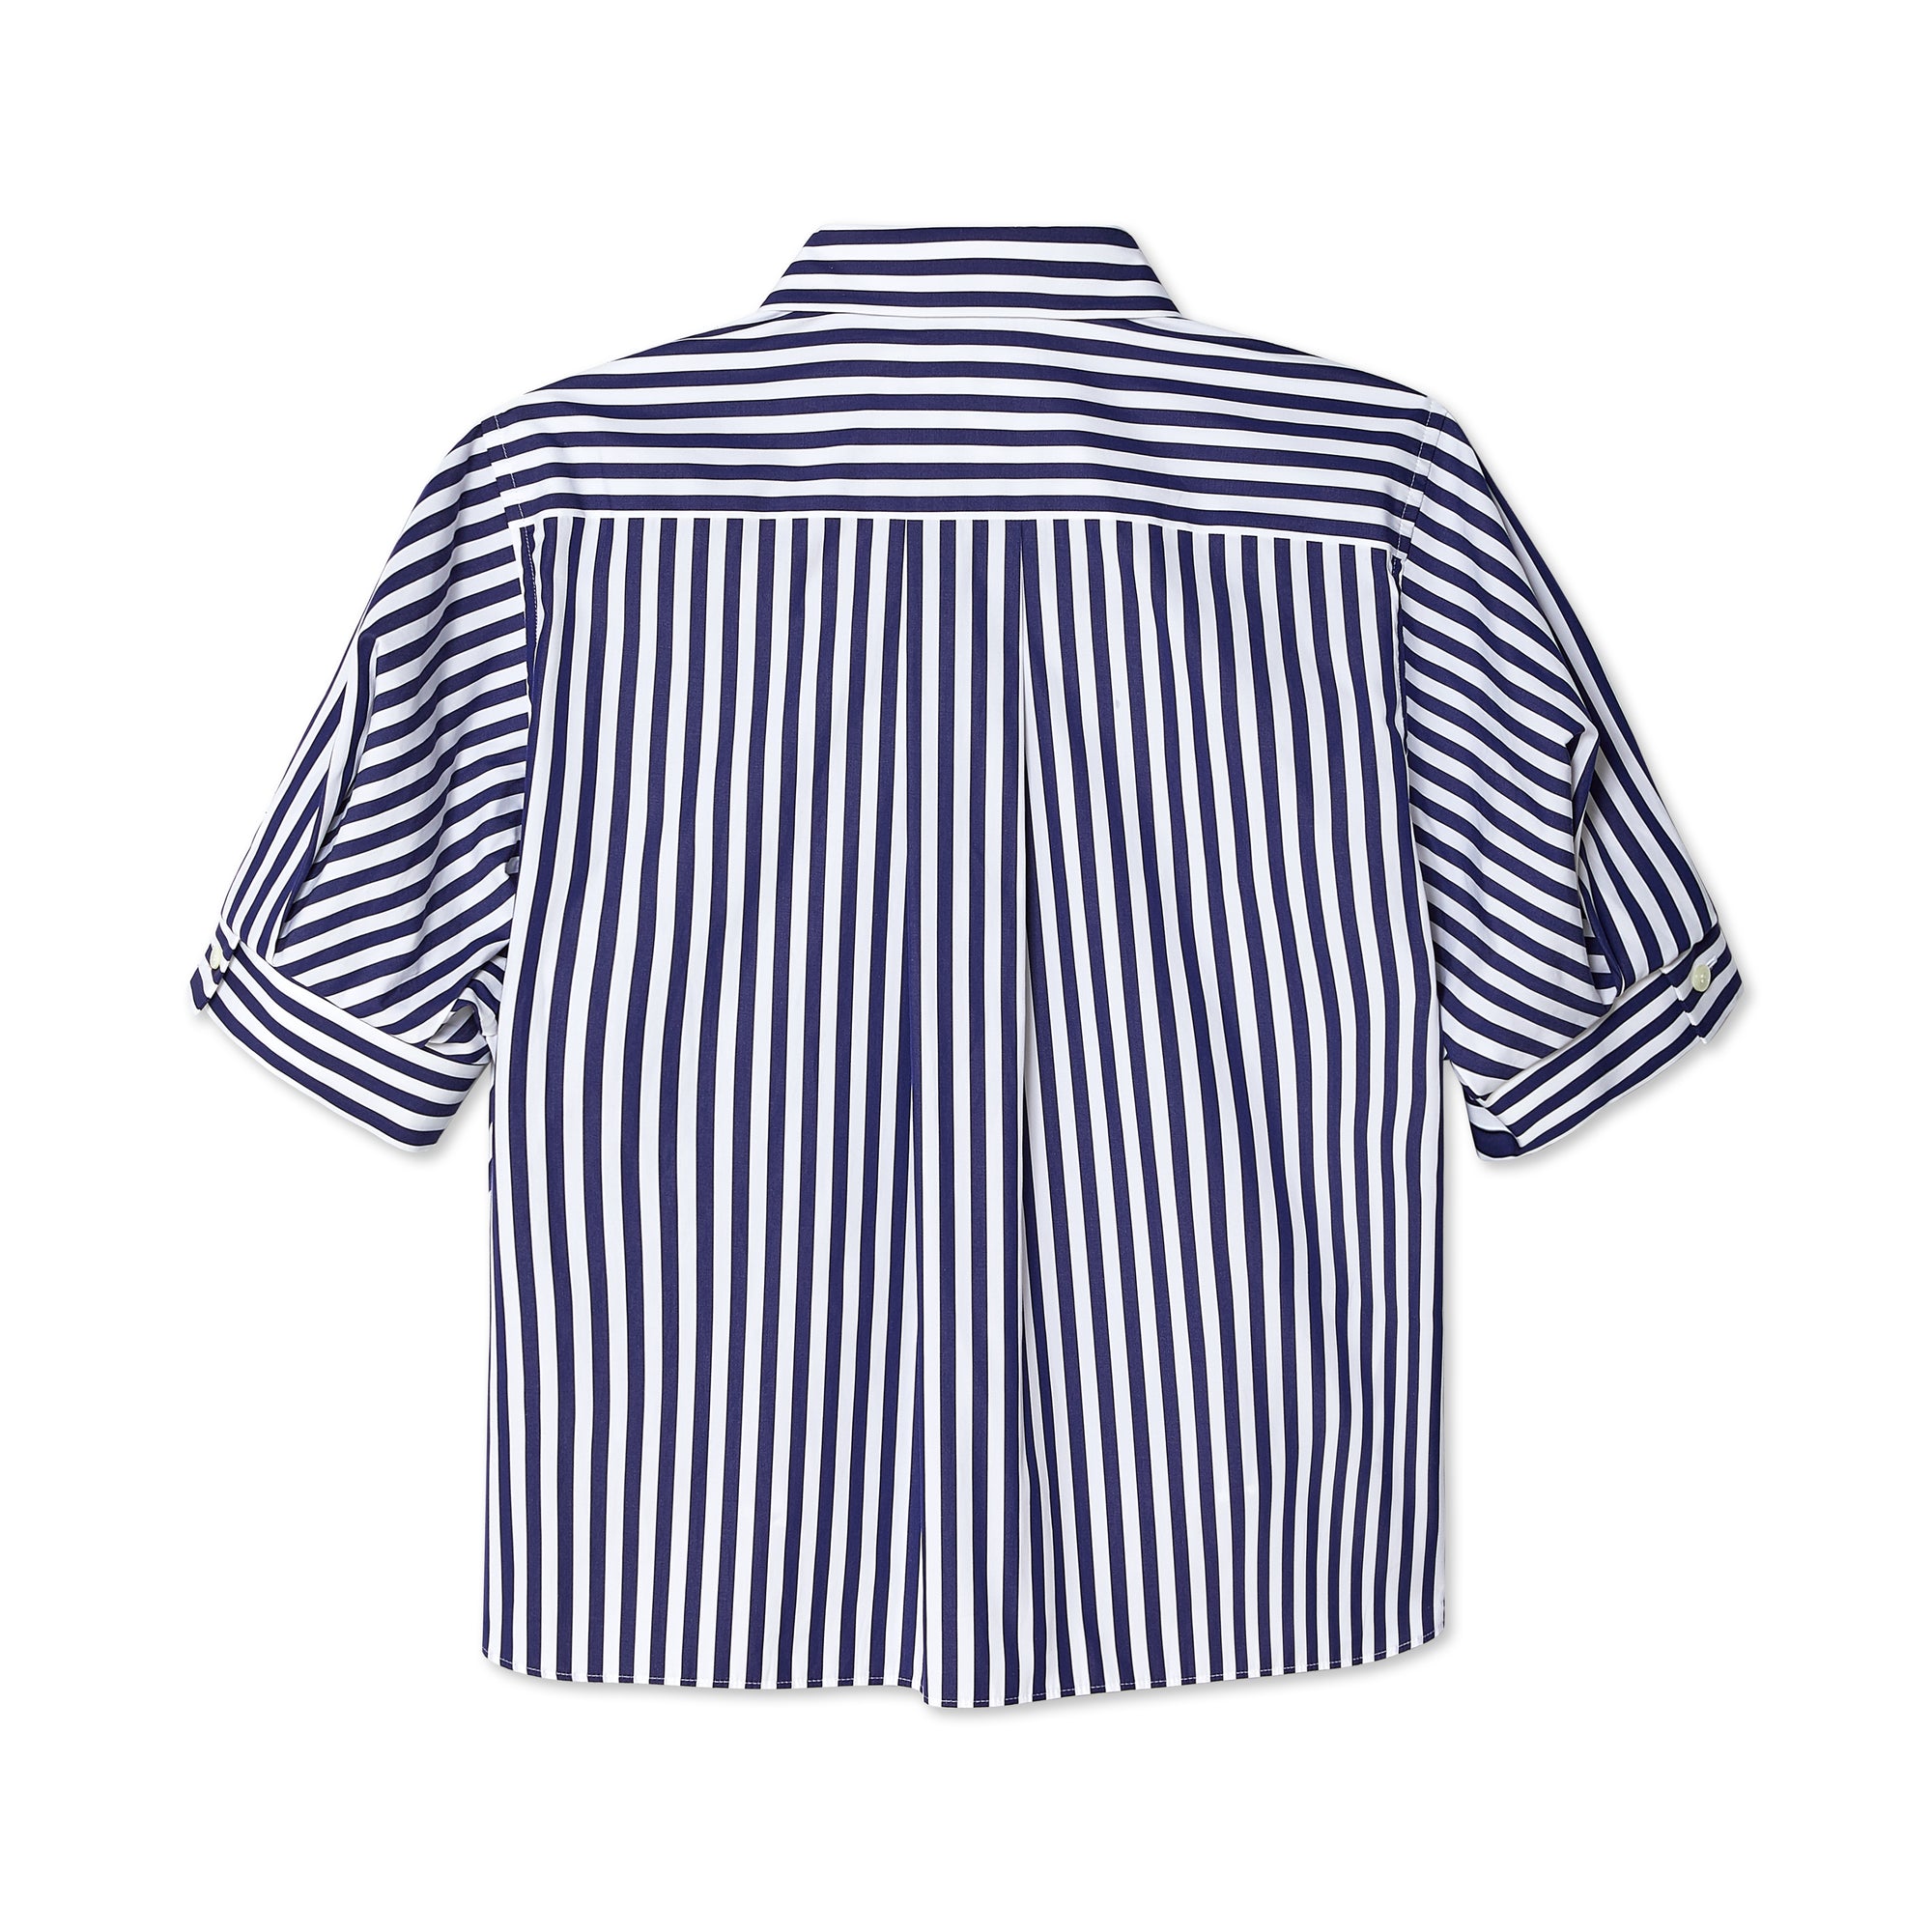 Sacai - Women's Cotton Poplin Shirt - (Navy Stripe) view 2